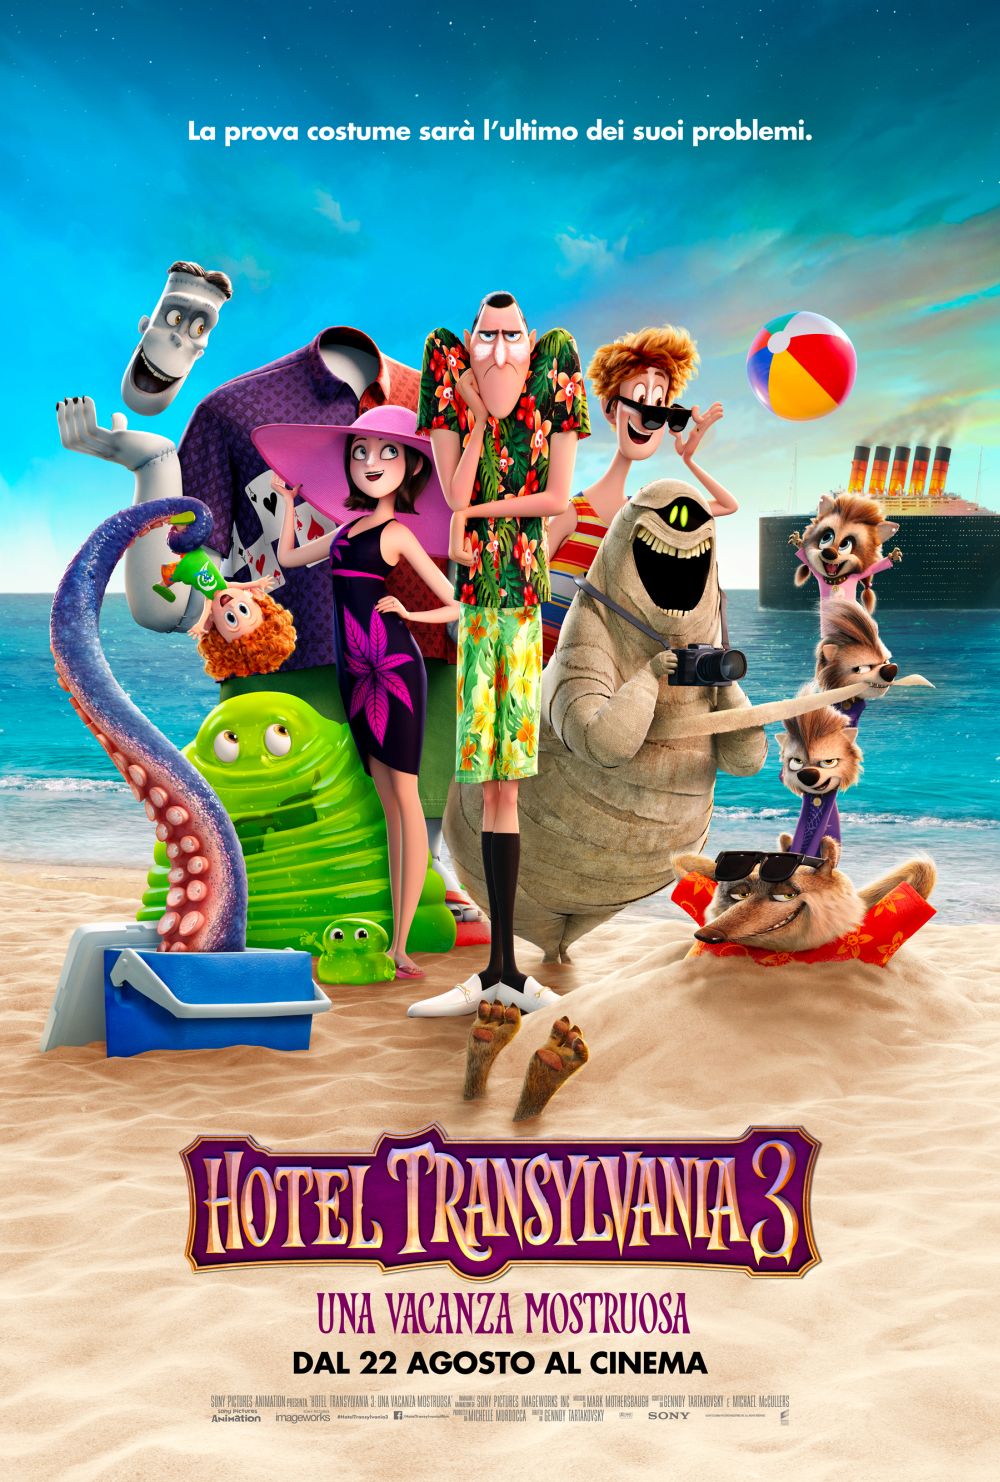 https://movieplayer.it/film/hotel-transylvania-3-una-vacanza-mostruosa_48333/